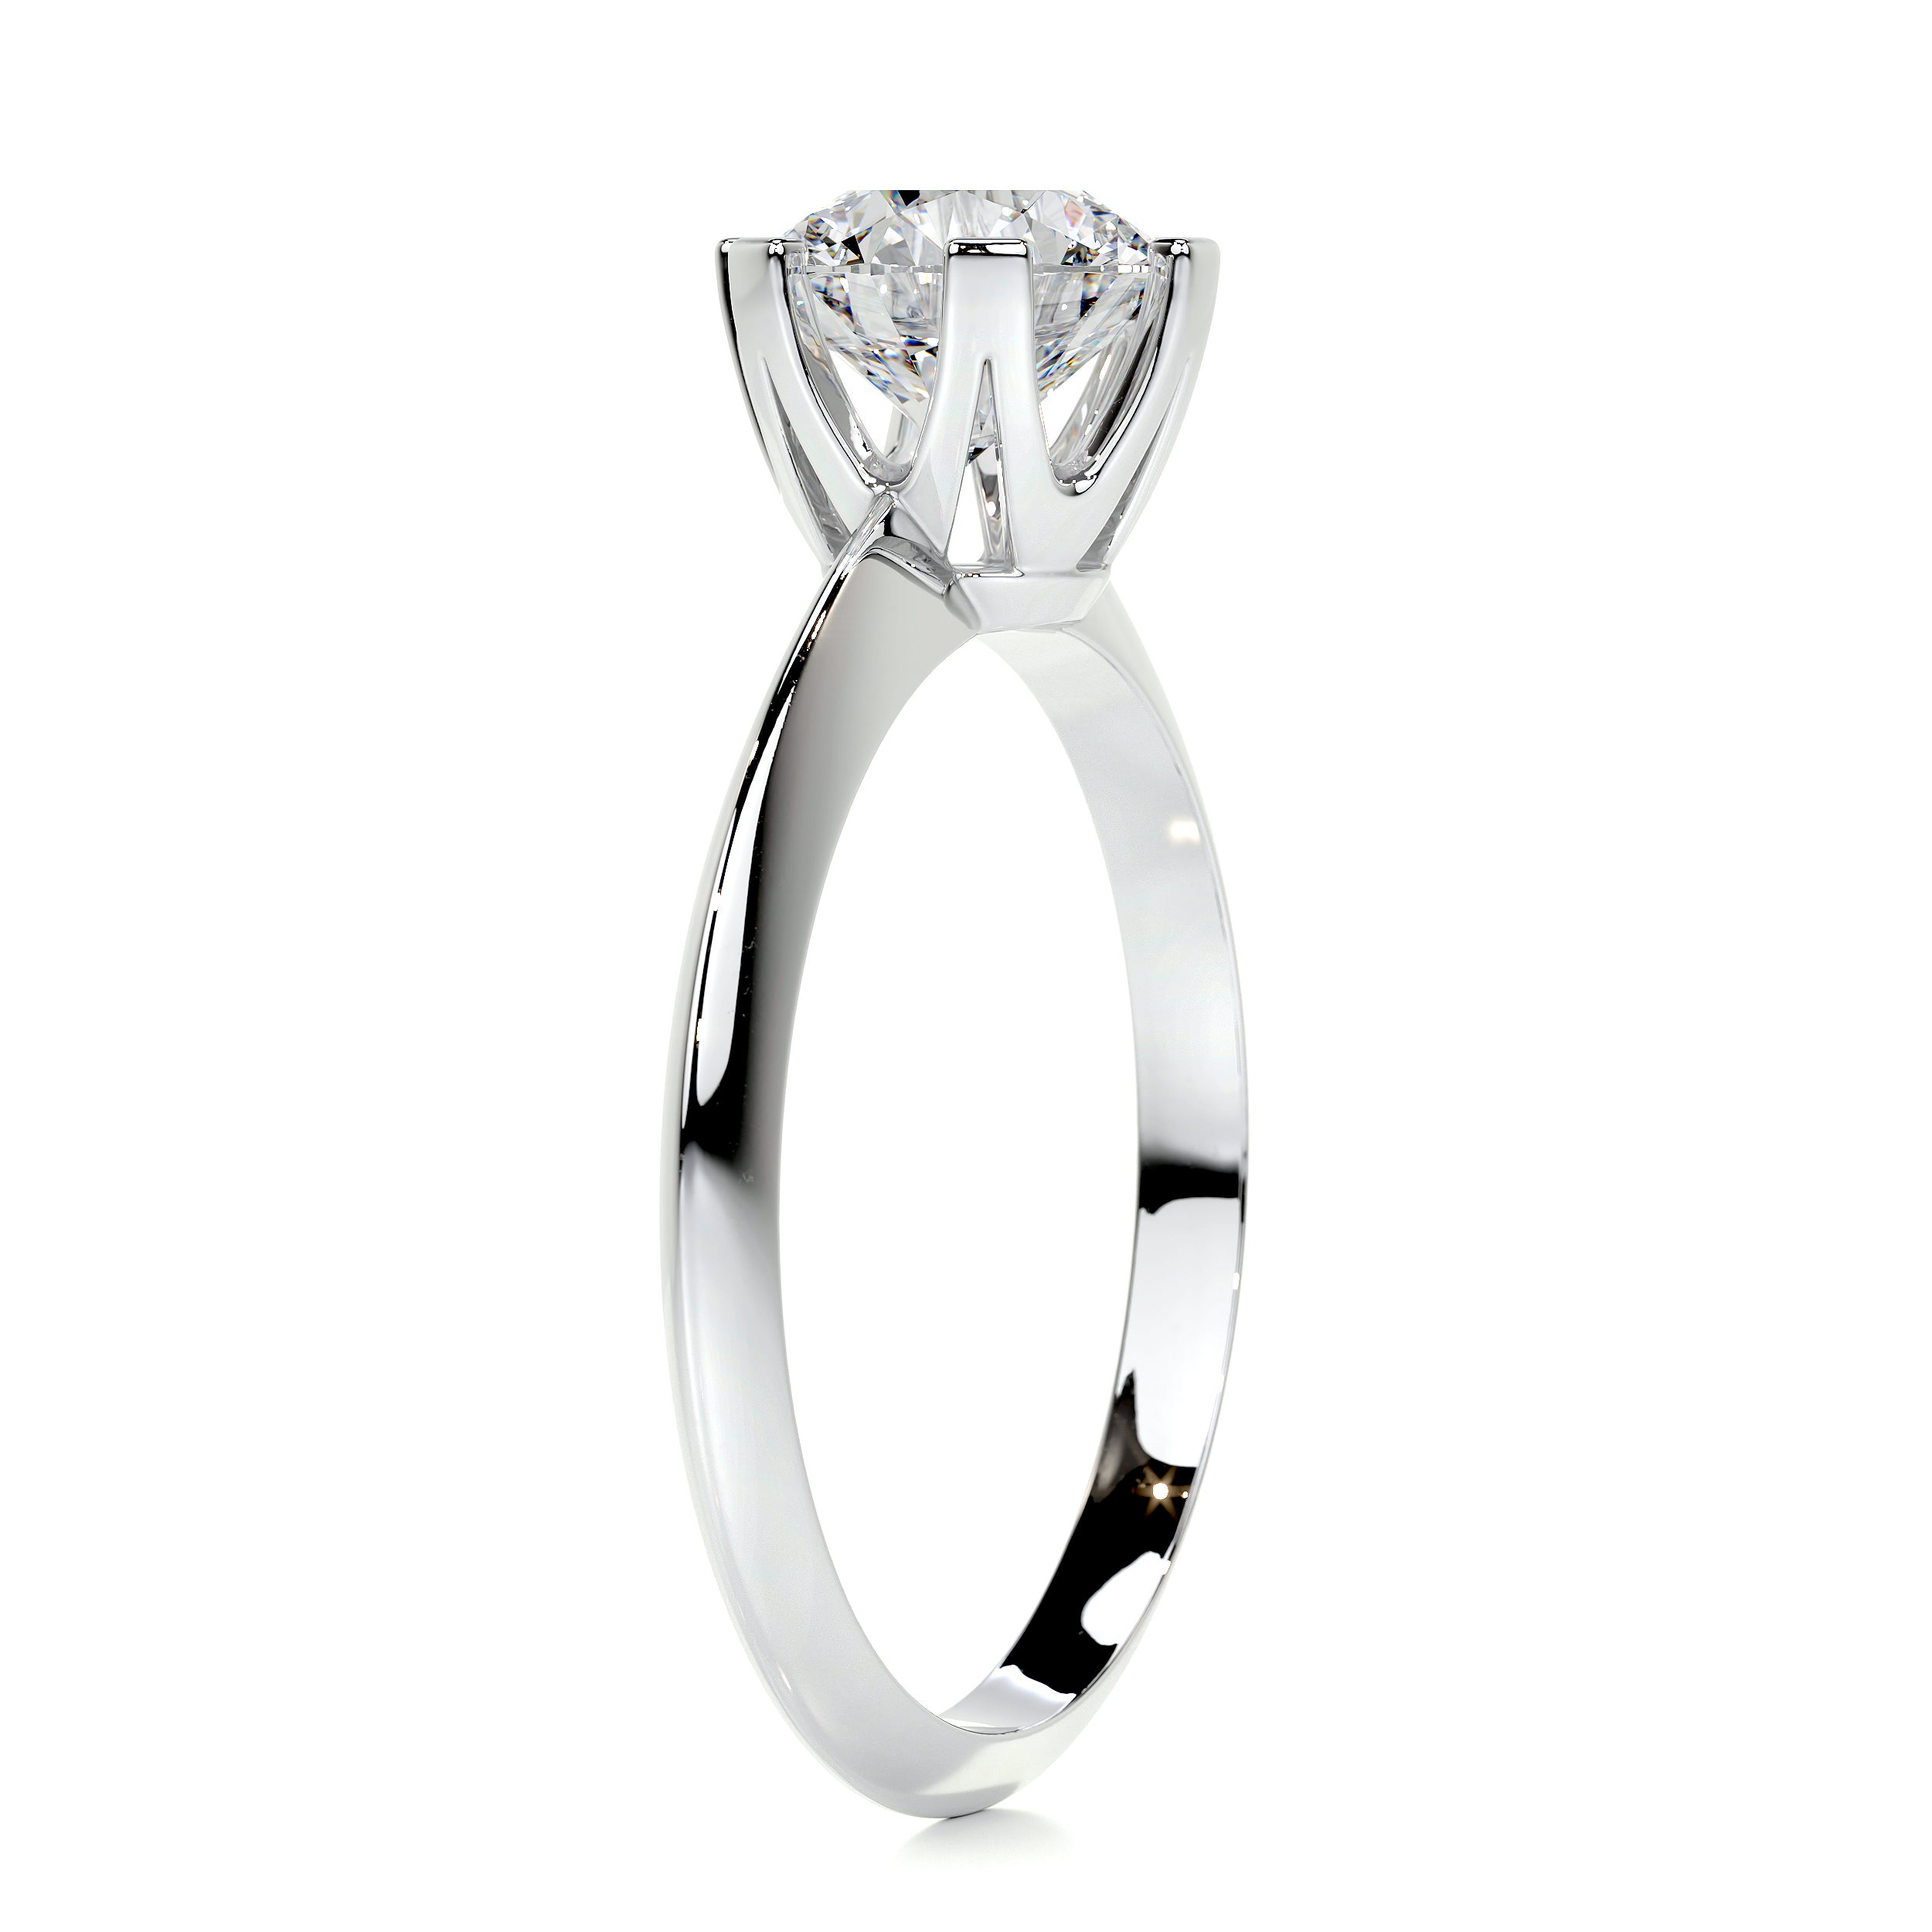 Alexis Diamond Engagement Ring   (1.25 Carat) -14K White Gold